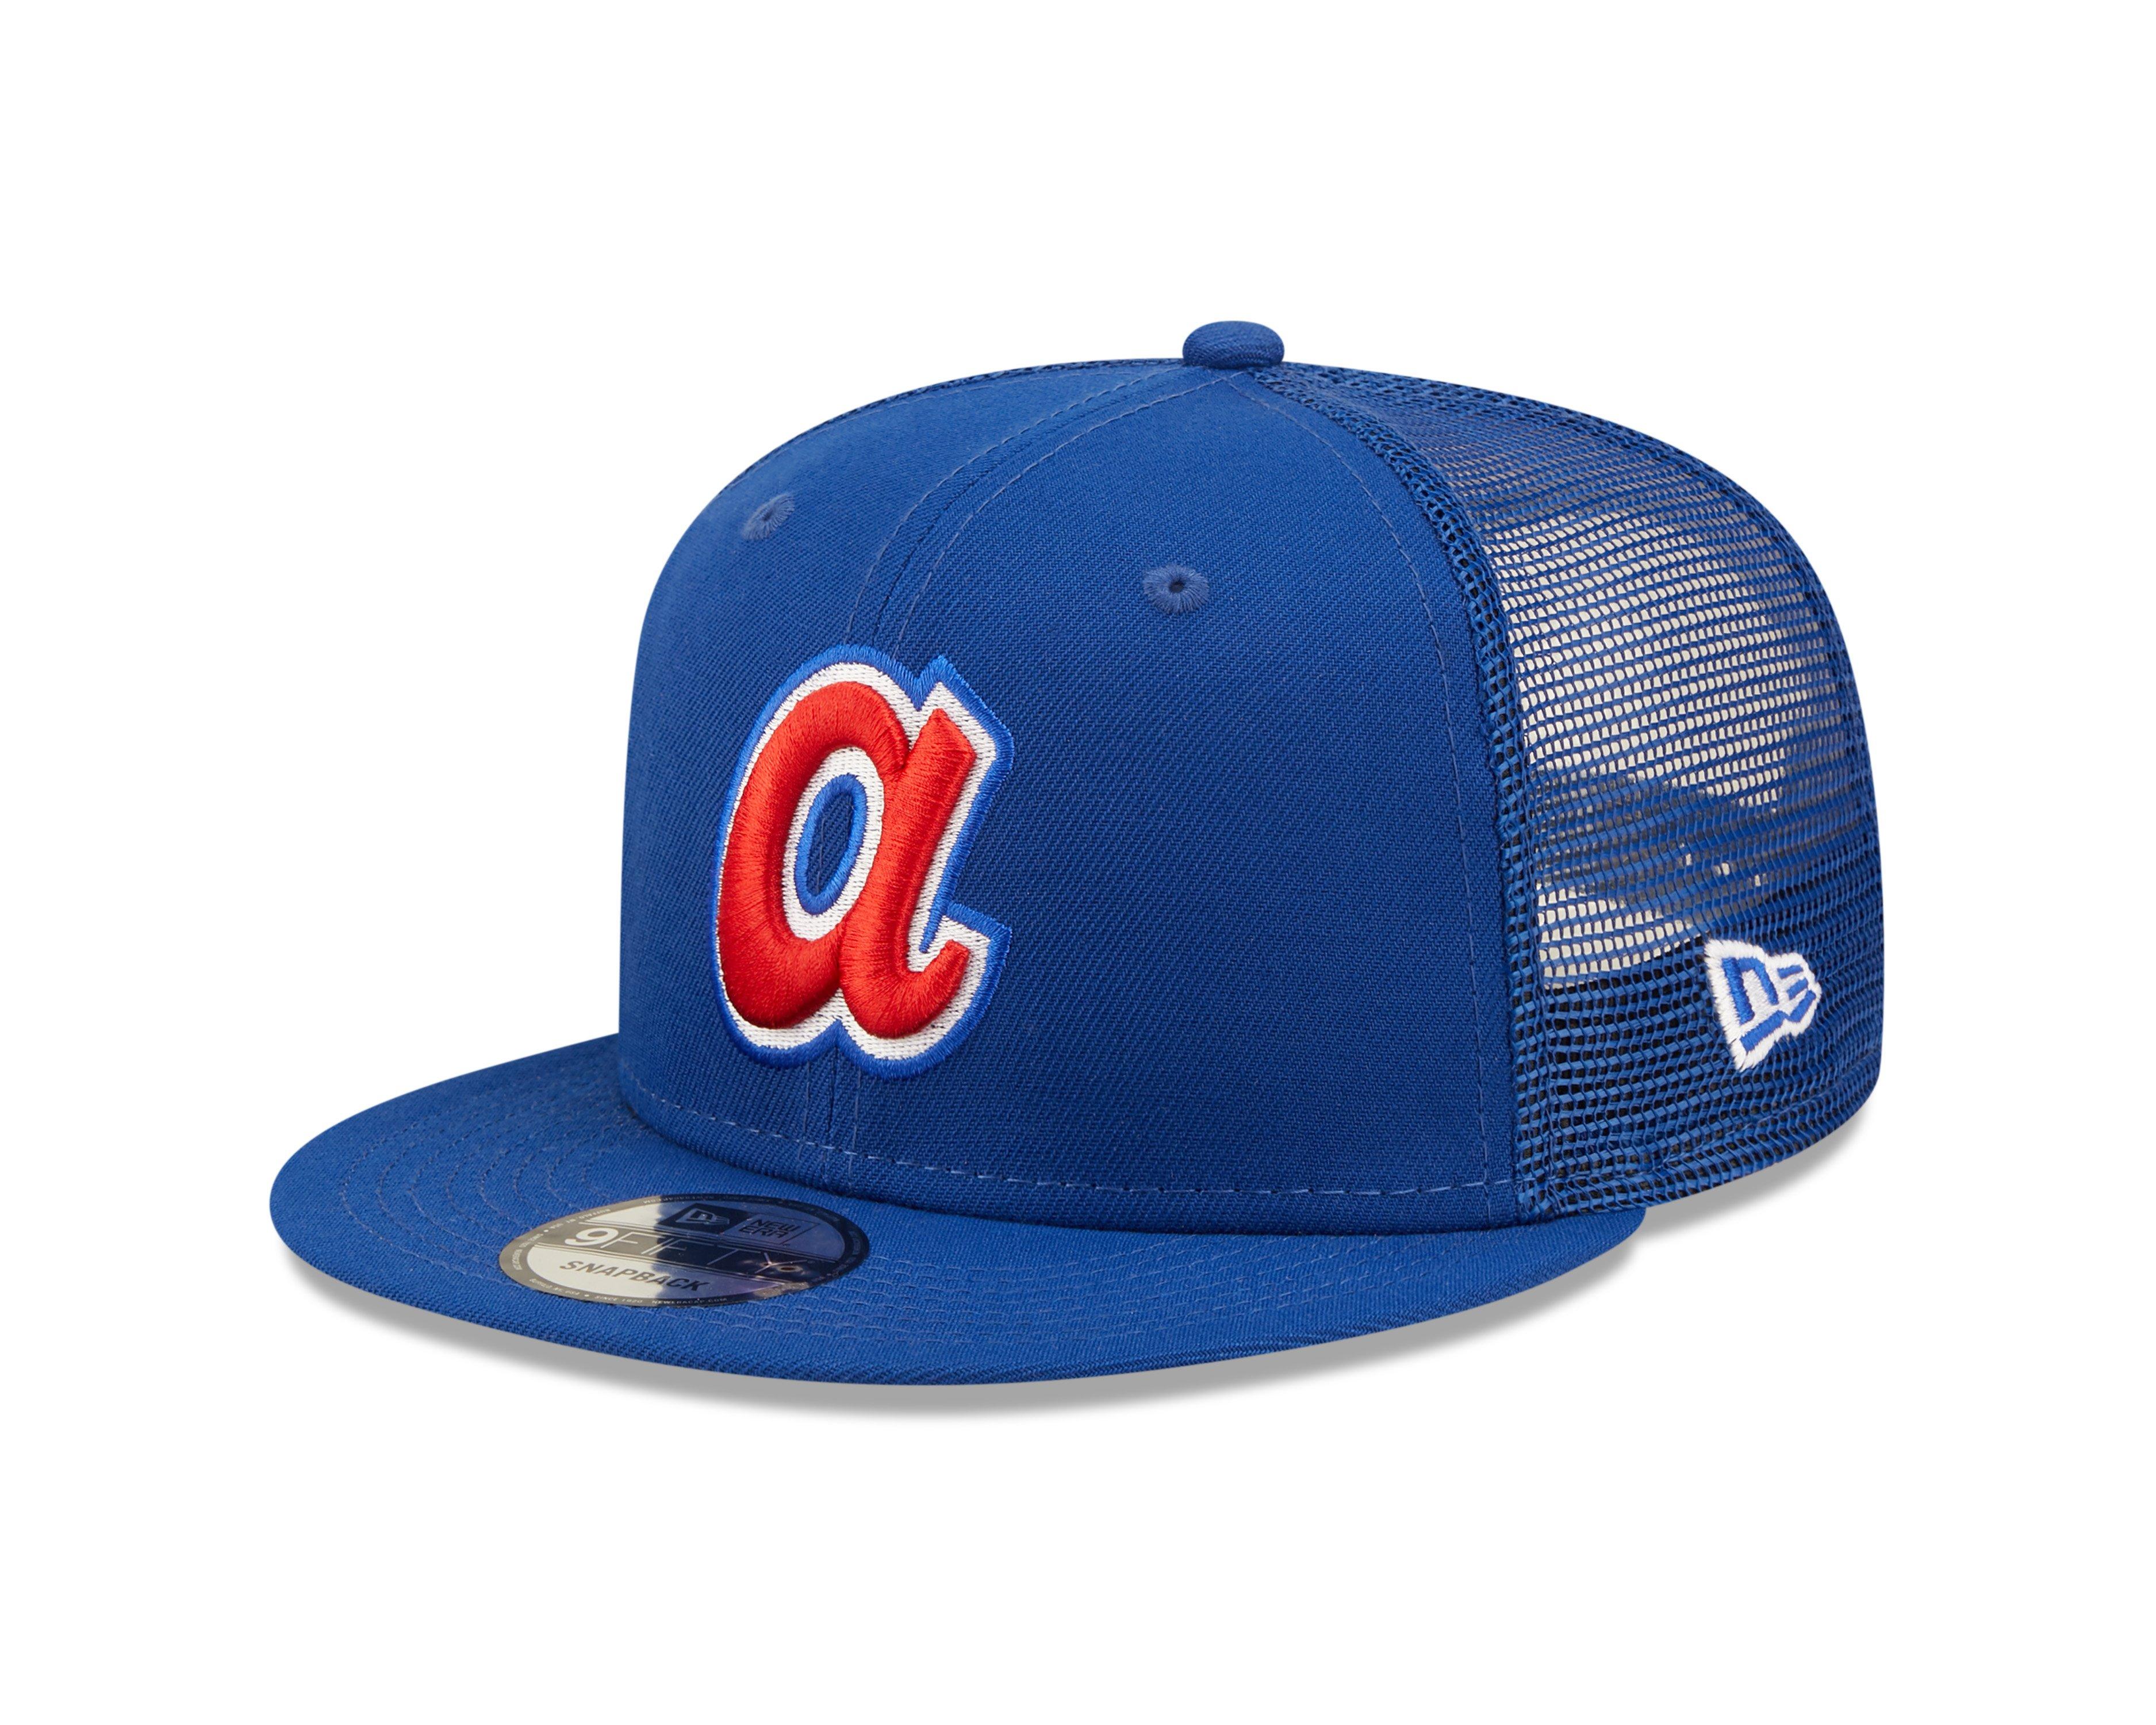 Atlanta Braves New Era 9FIFTY Cooperstown Snapback Hat Cap 950 Retro